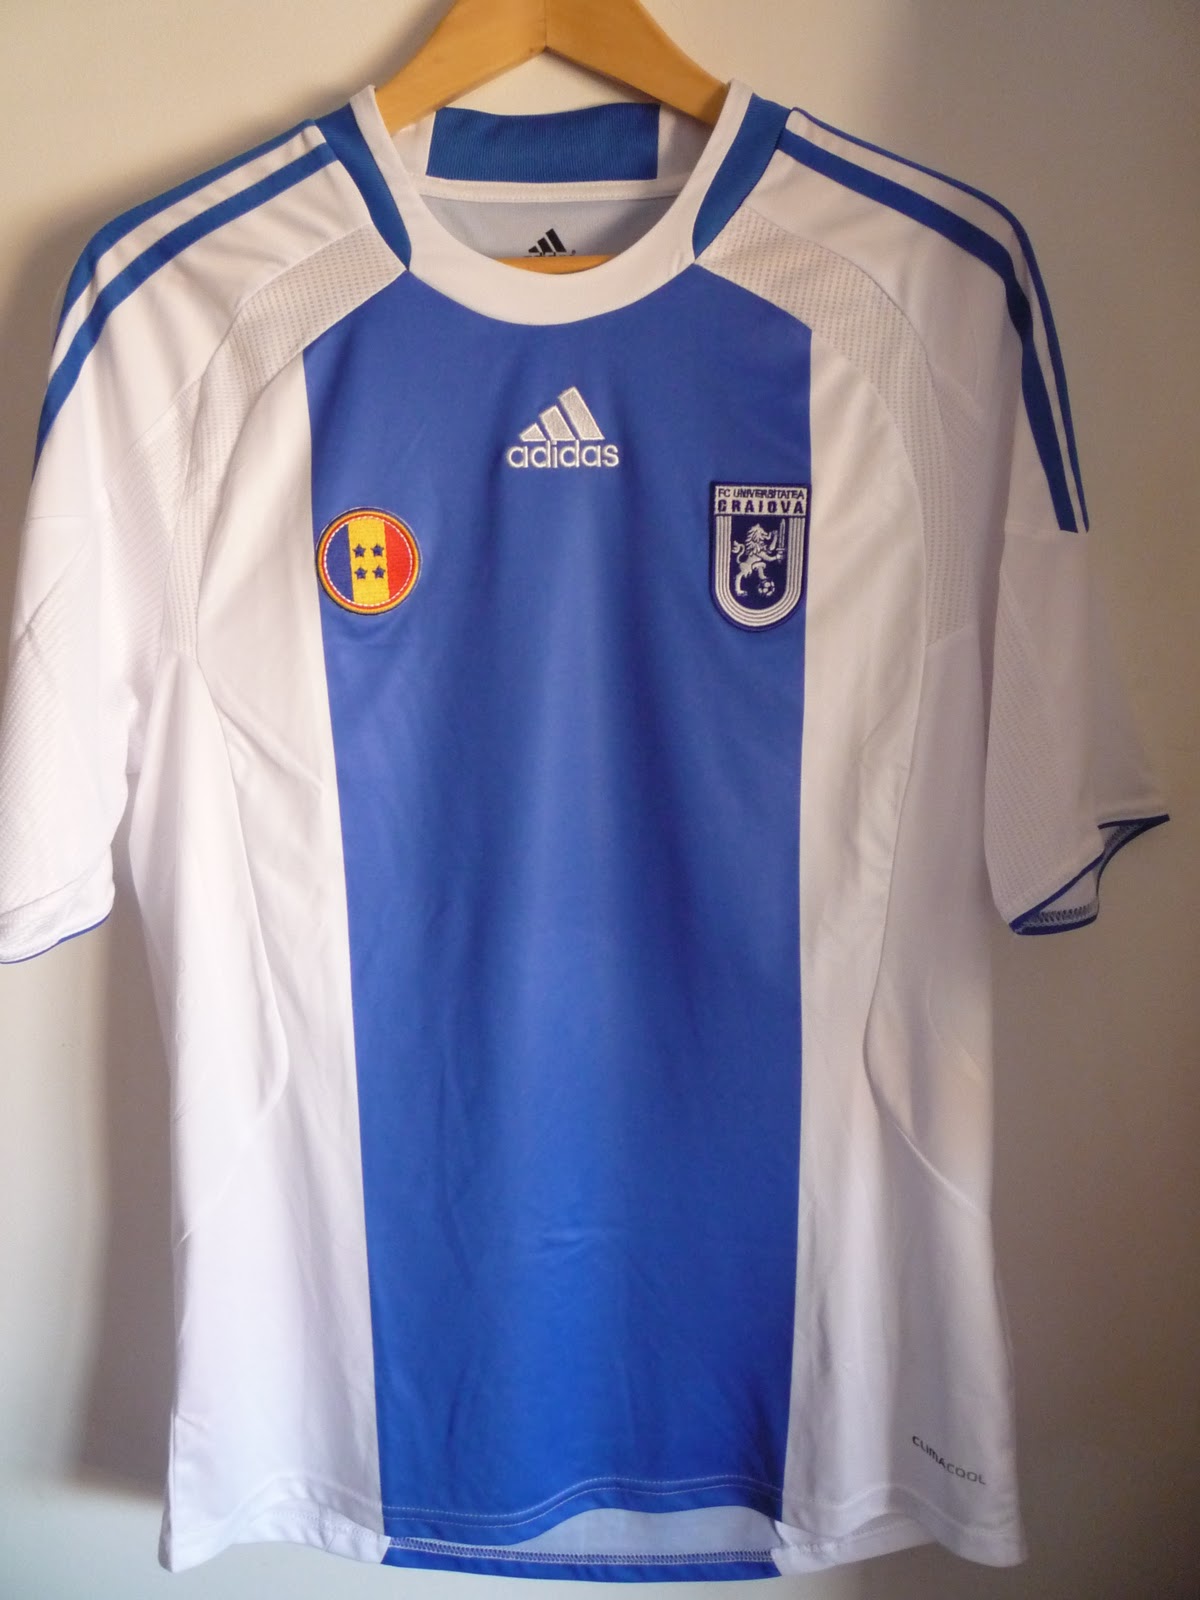 Hình nền Fc Universitatea Craiova jersey (2) - hình nền bóng đá - hình nền cầu thủ - hình nền đội bóng